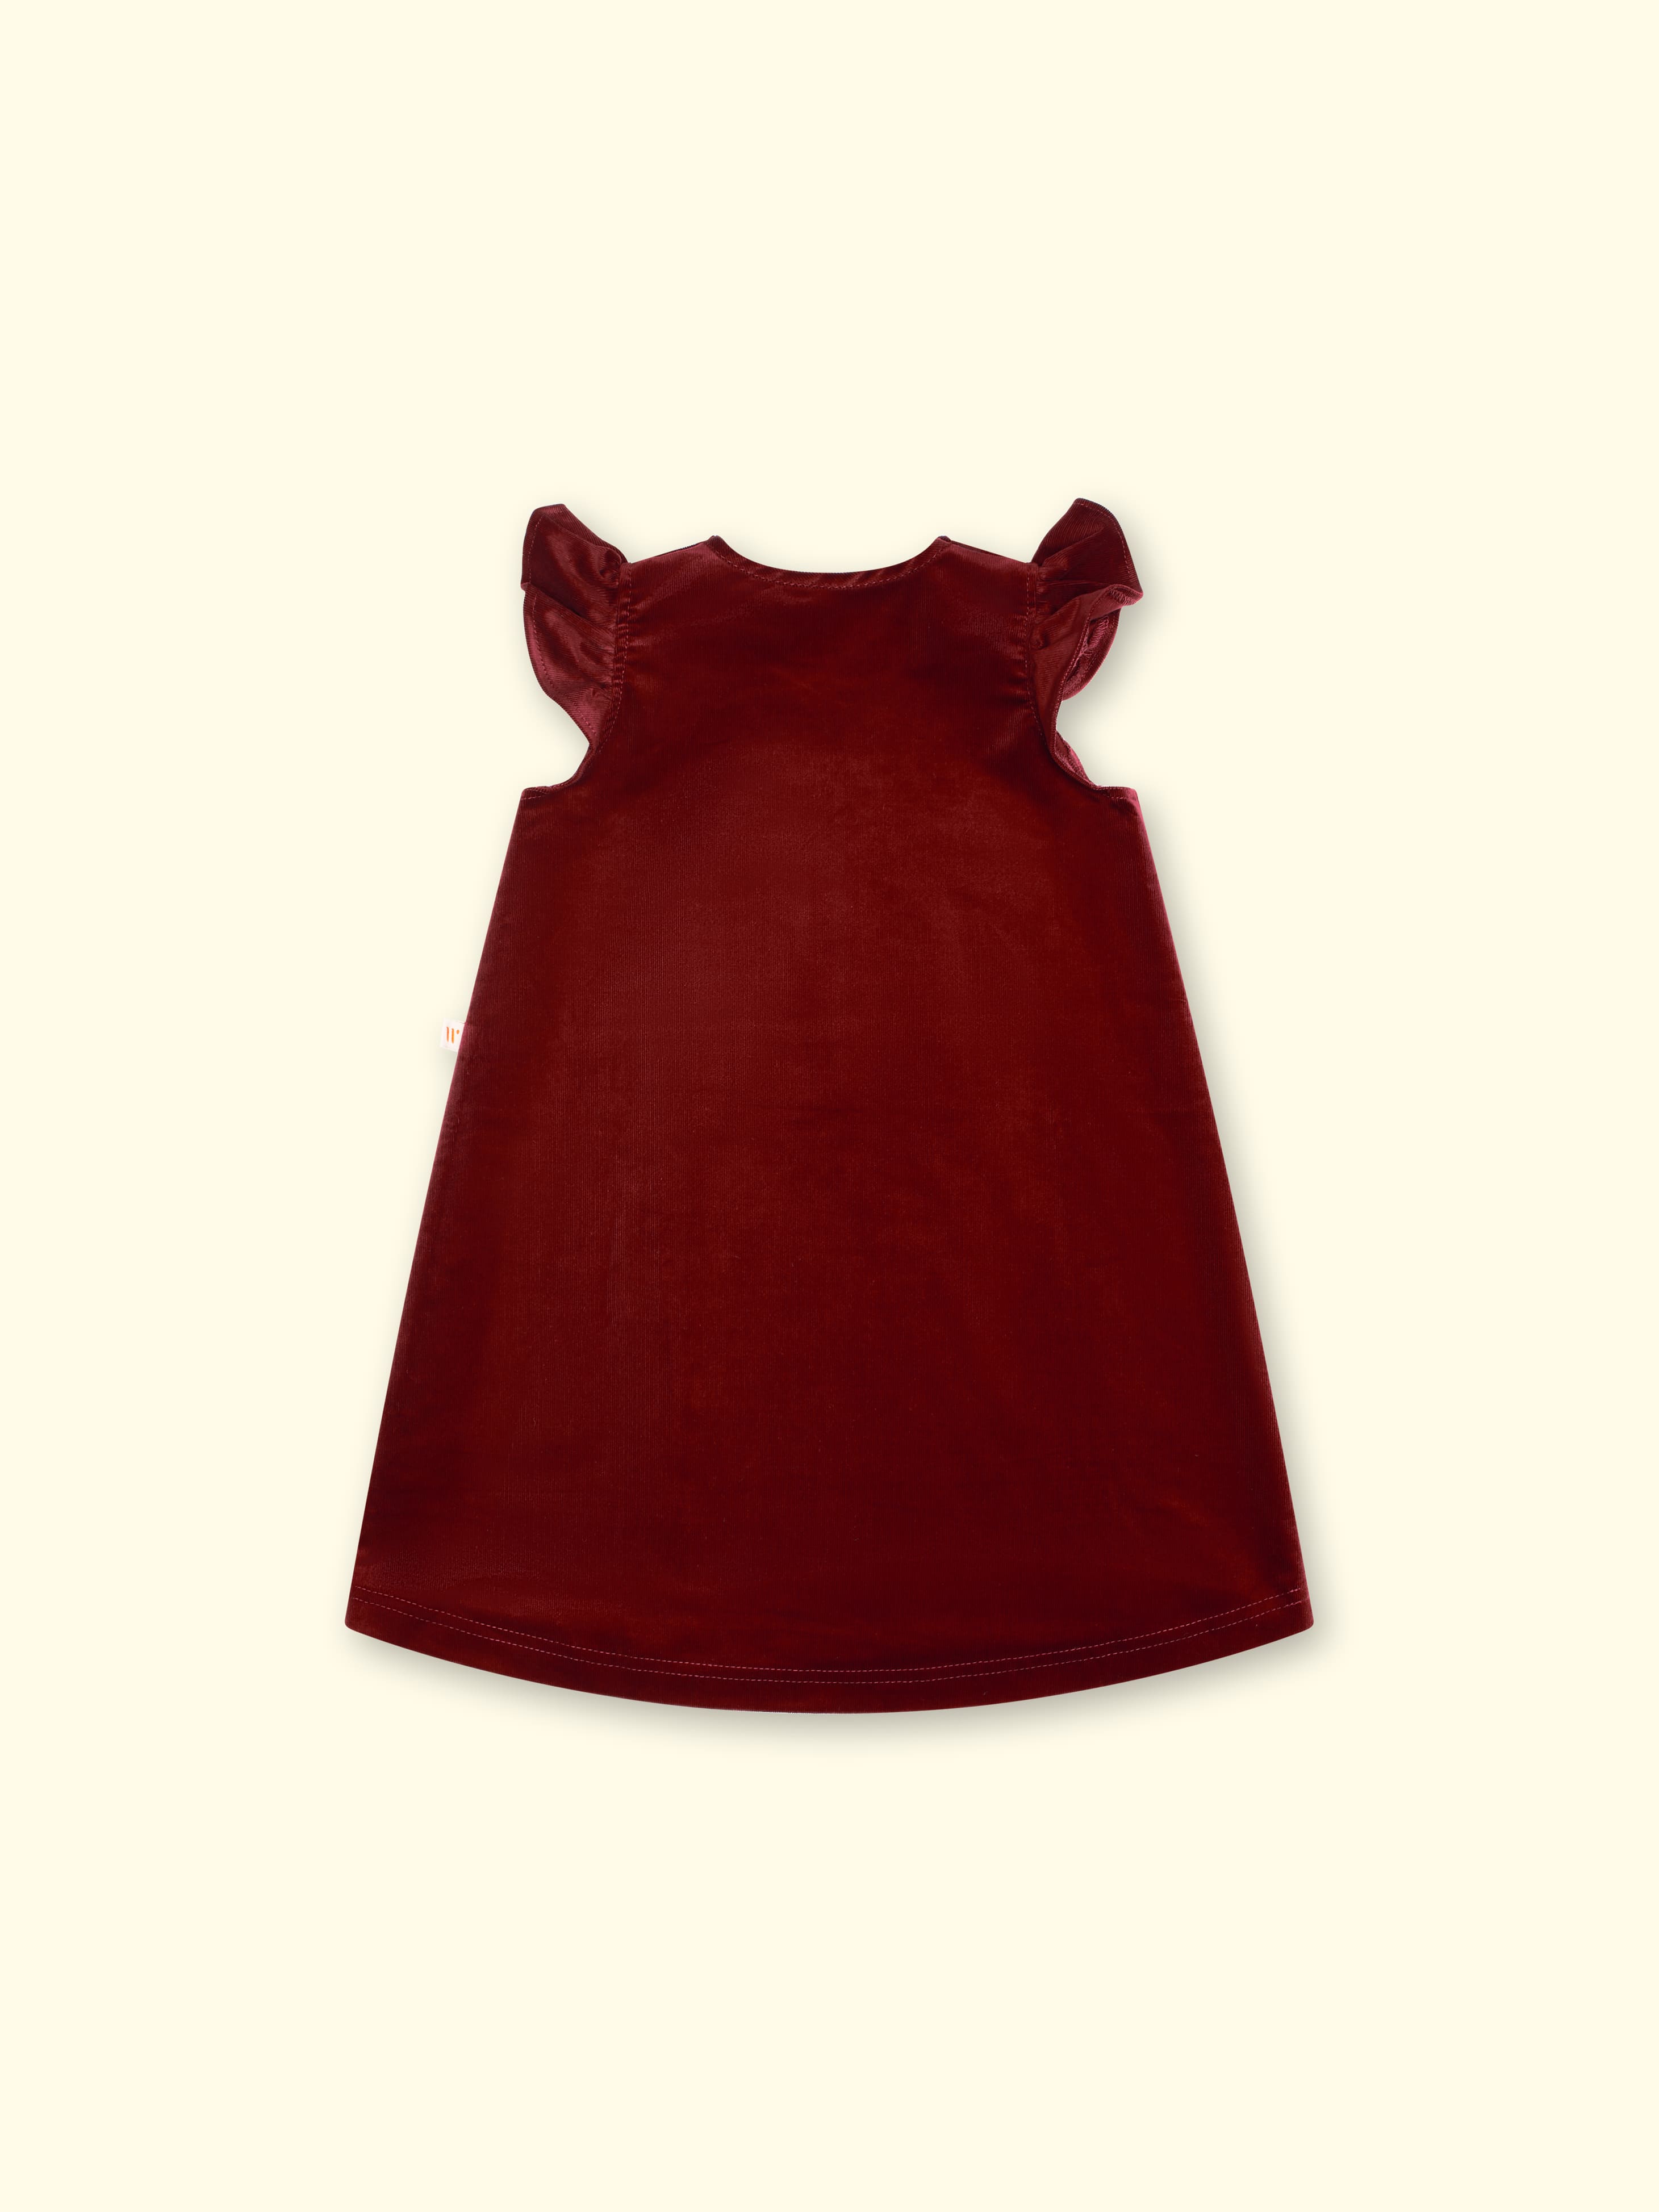 Easy-Anziehen-Kleid Coco